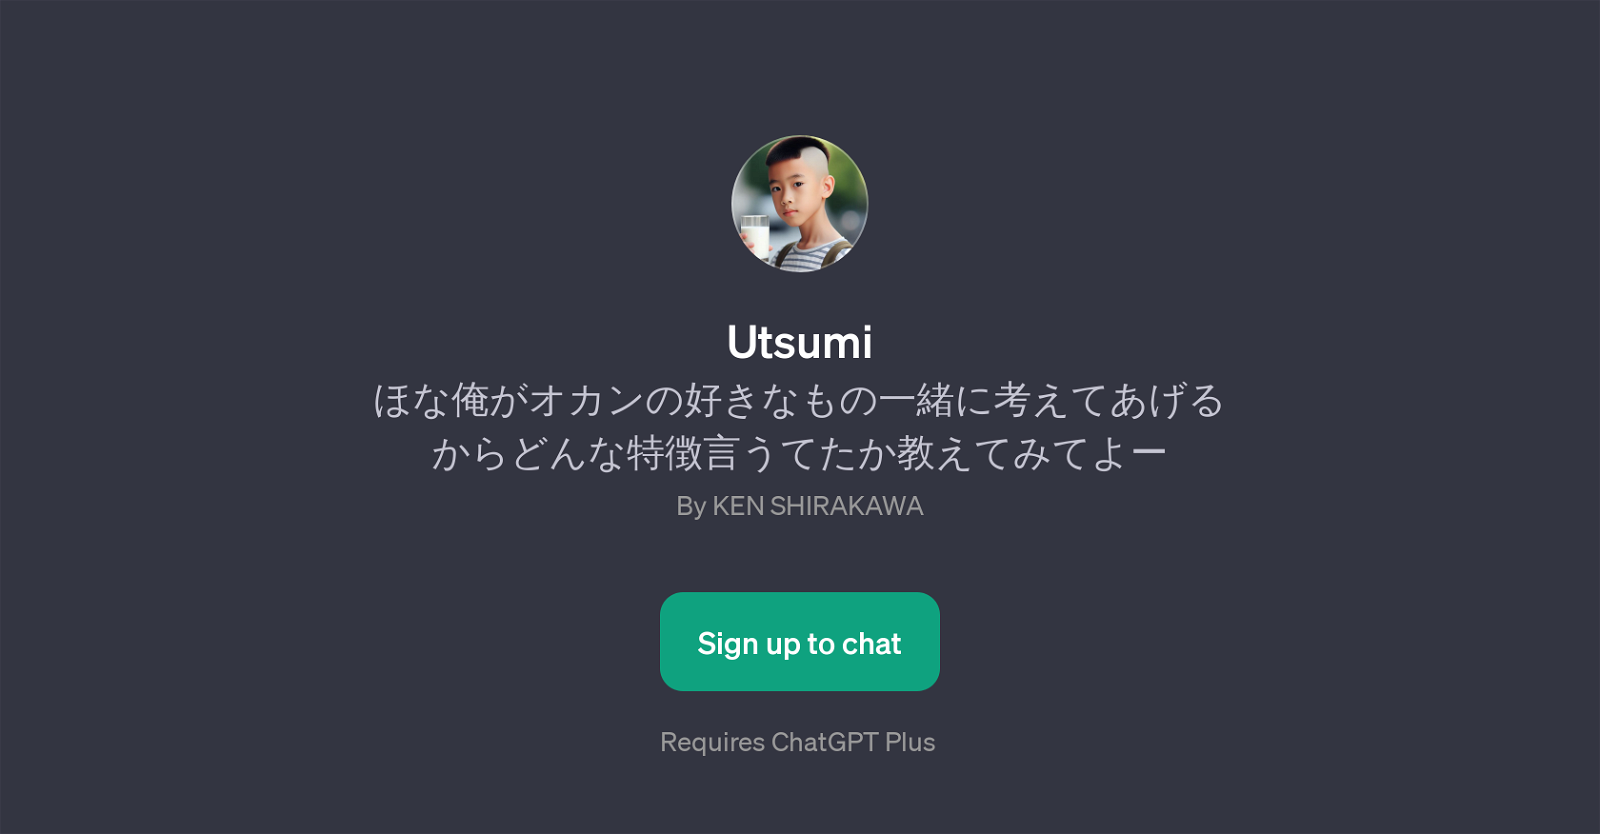 Utsumi website